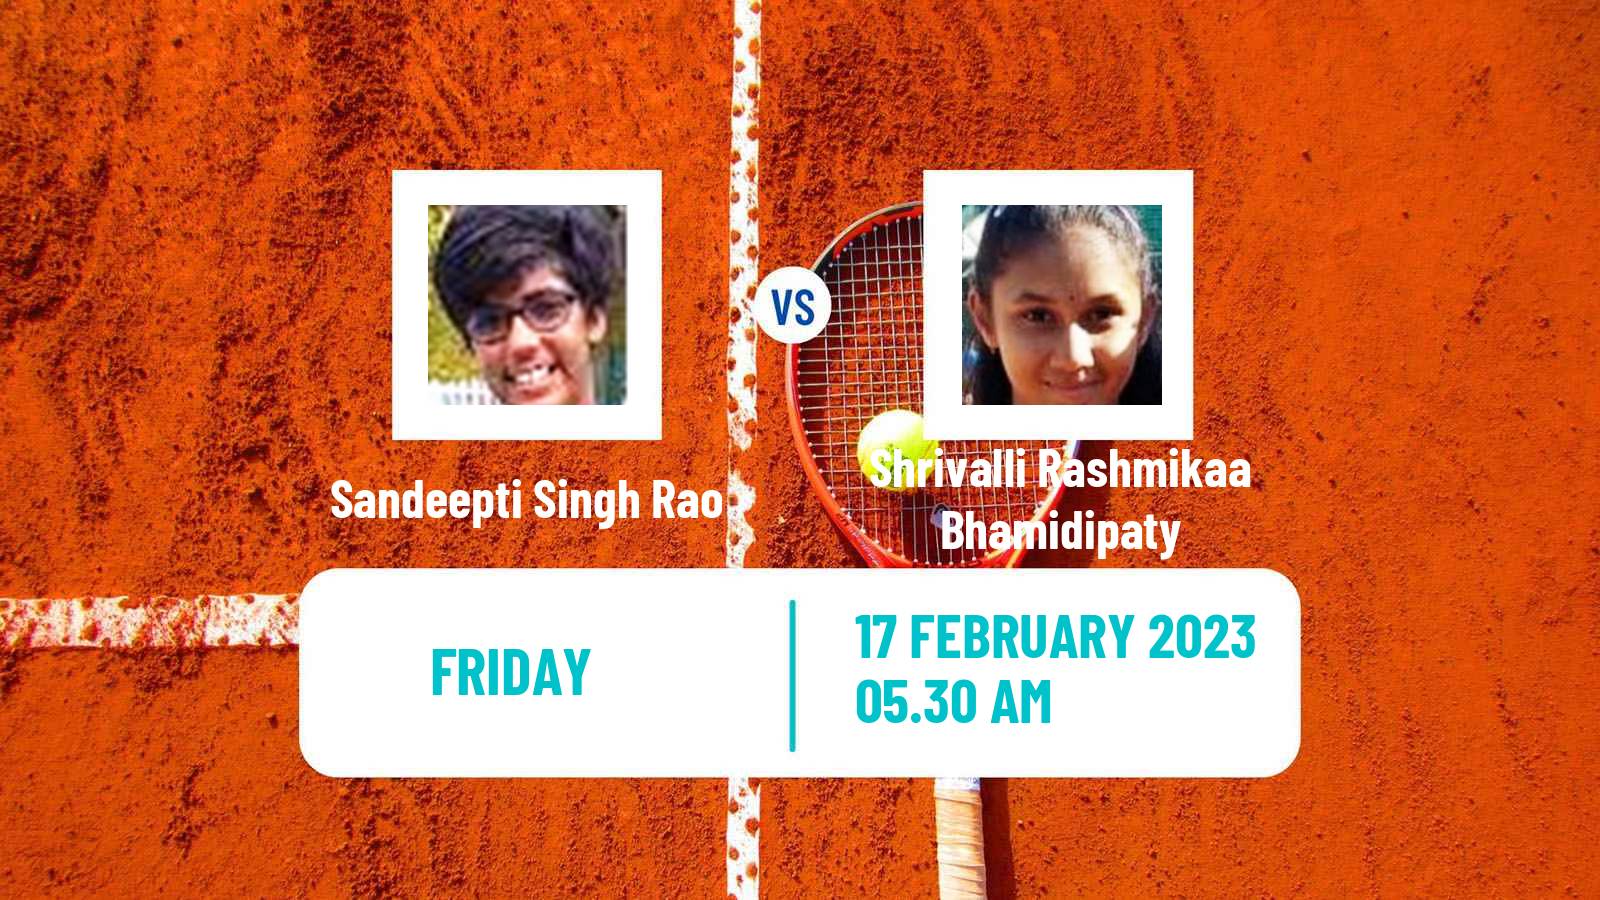 Tennis ITF Tournaments Sandeepti Singh Rao - Shrivalli Rashmikaa Bhamidipaty